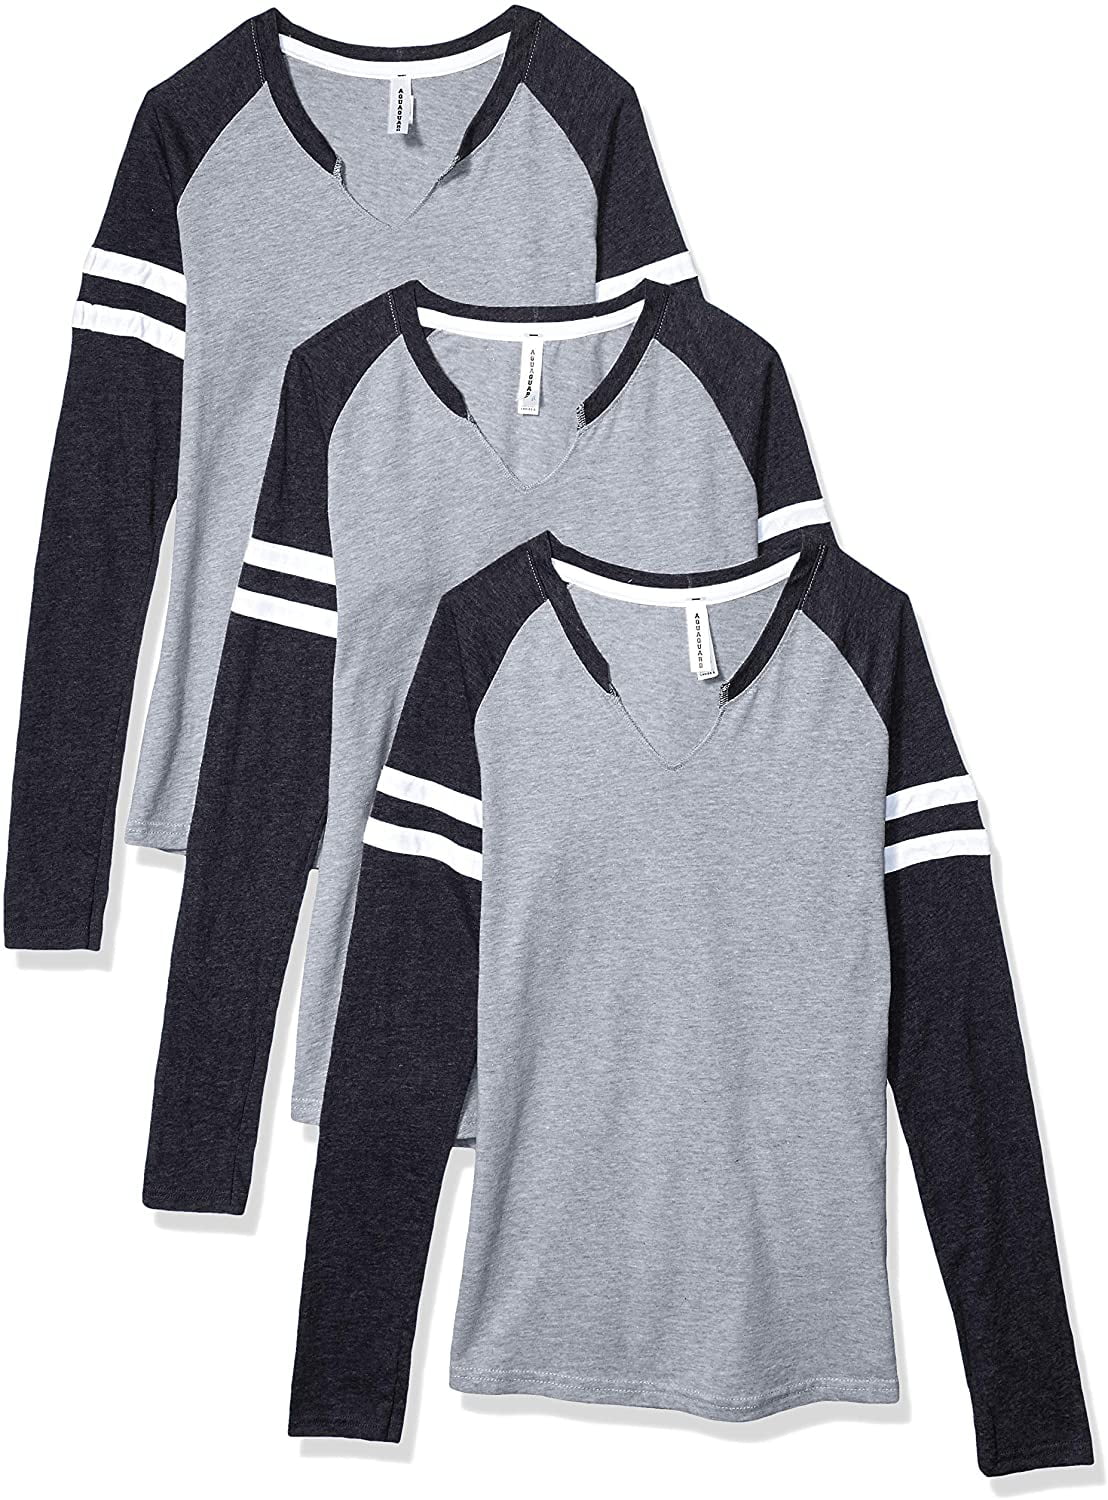 AquaGuard Womens Gameday Mash-up Long-Sleeve Fine Jersey T-Shirt-3 Pack